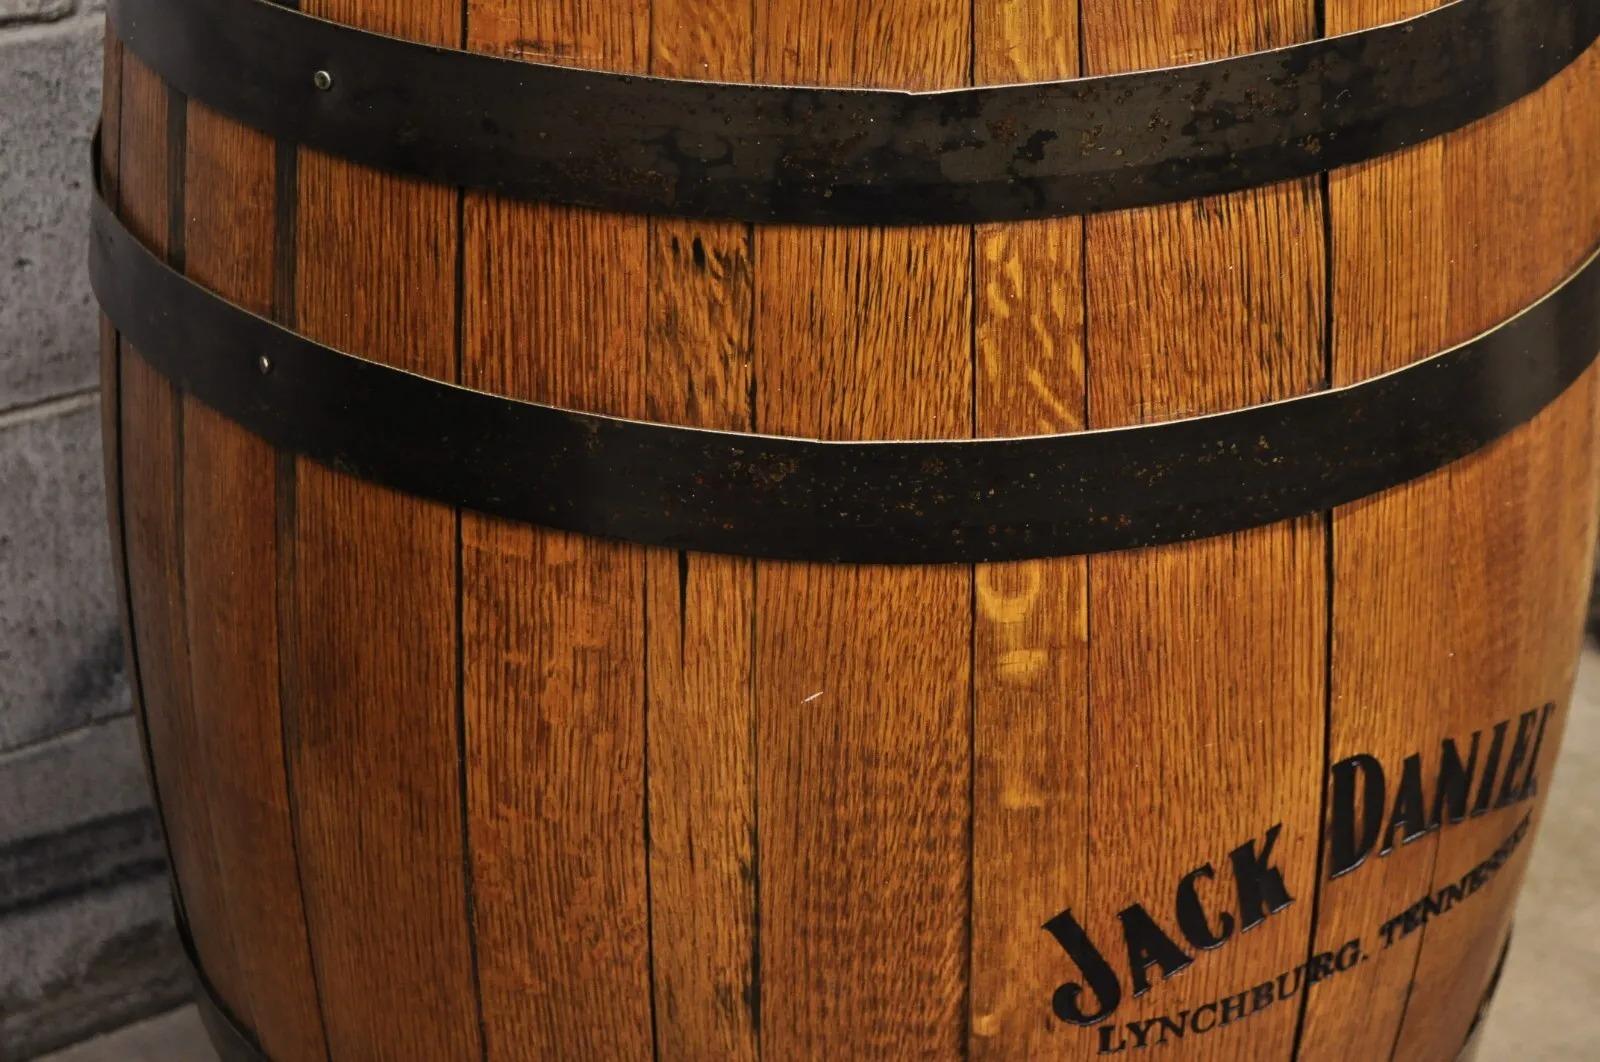 Jack Daniels Whiskey Barrel Engraved Oak Wood Metal Bands In Good Condition For Sale In Philadelphia, PA